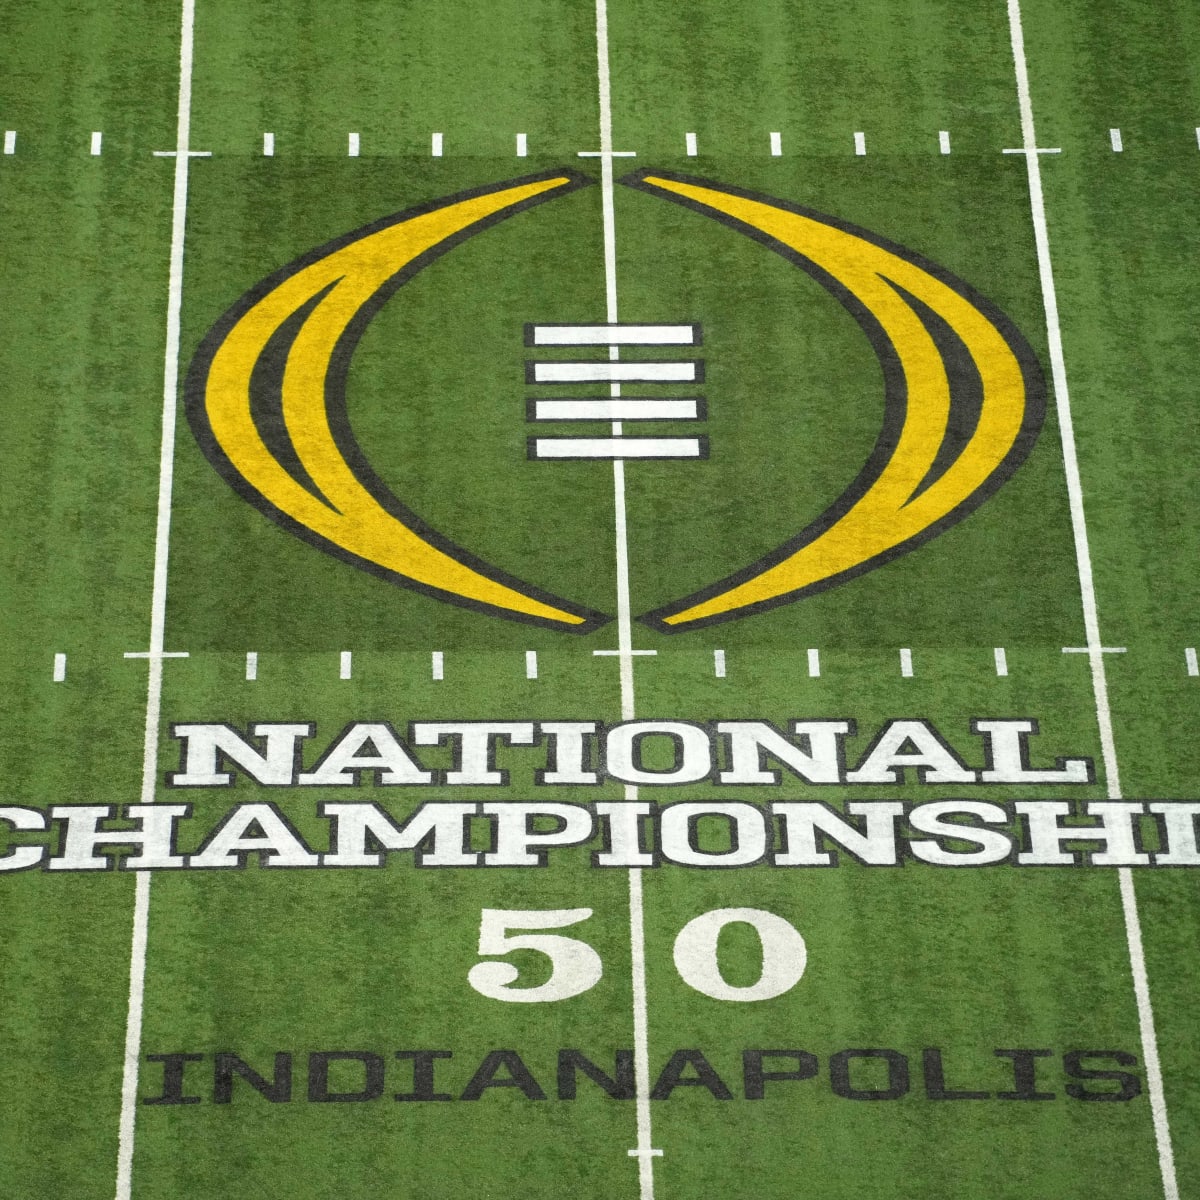 2022 College Football Playoff National Championship - Lucas Oil Stadium